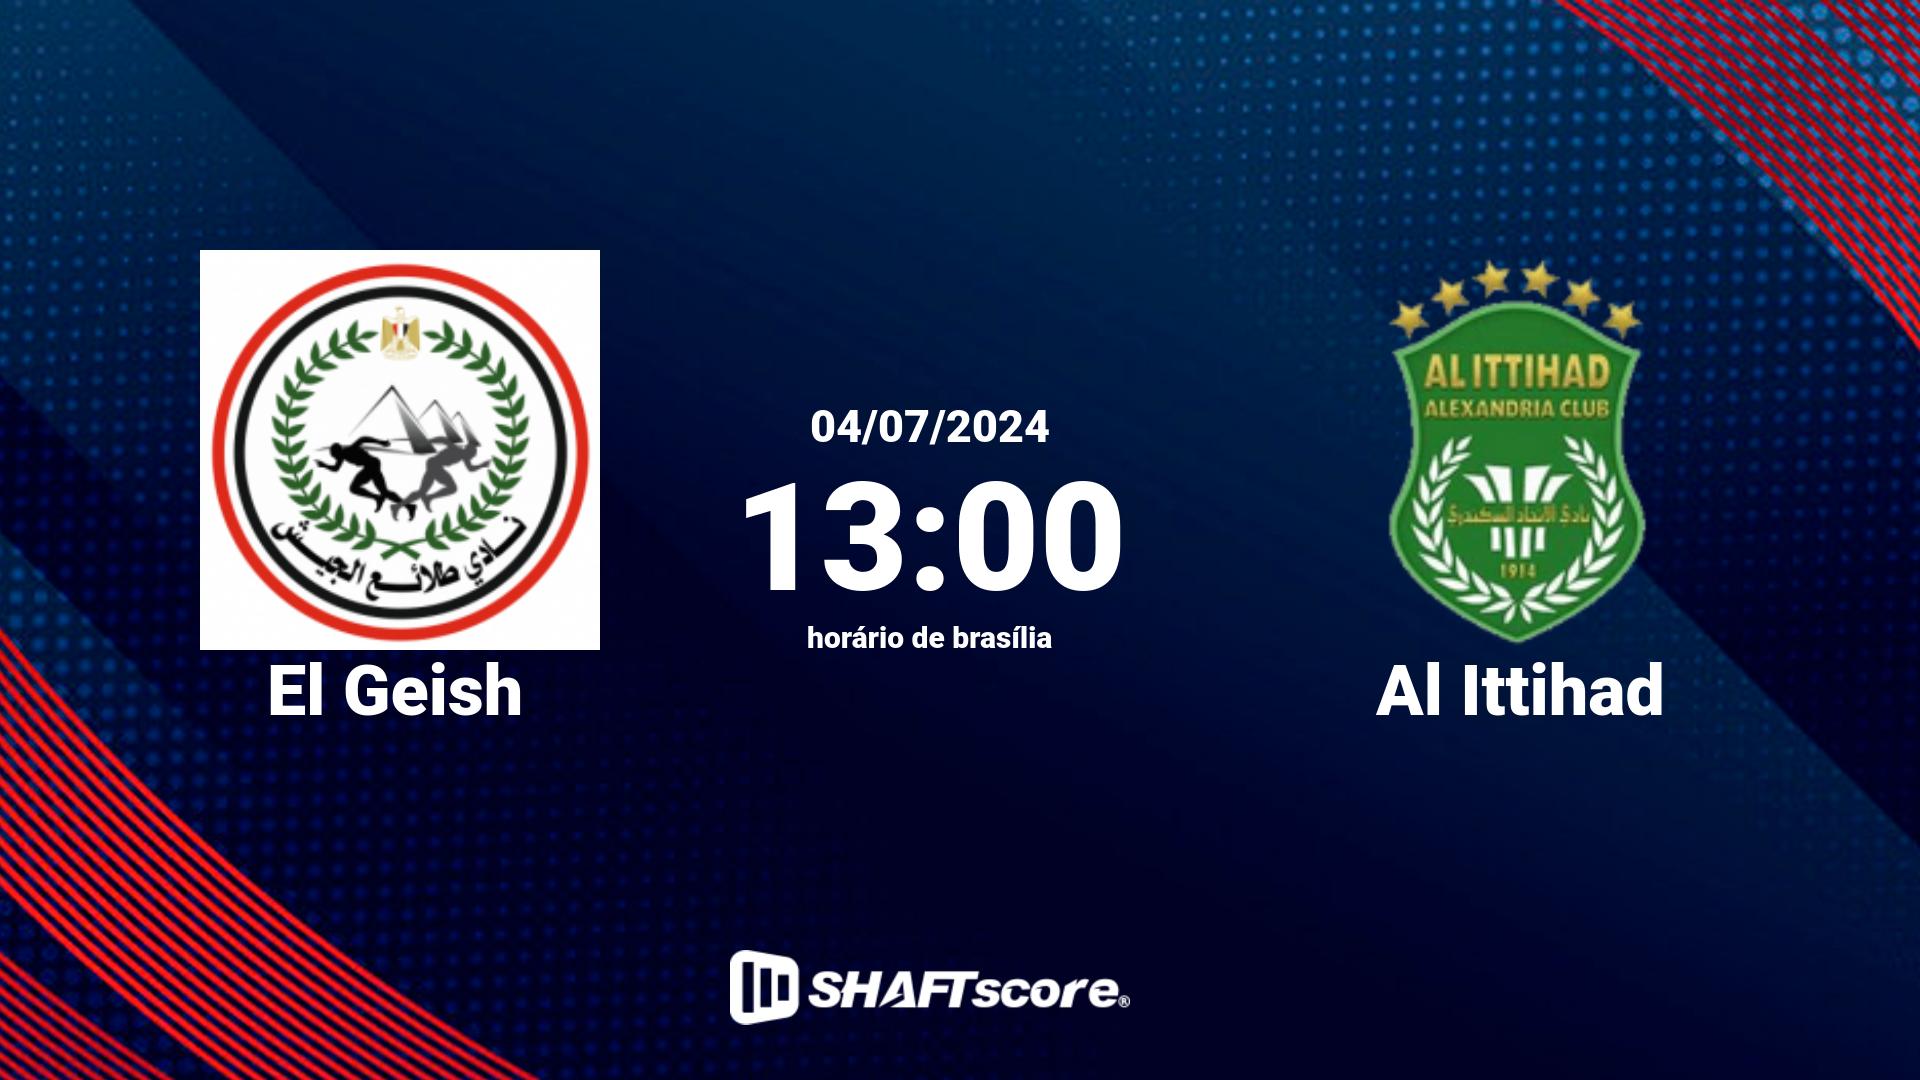 Estatísticas do jogo El Geish vs Al Ittihad 04.07 13:00